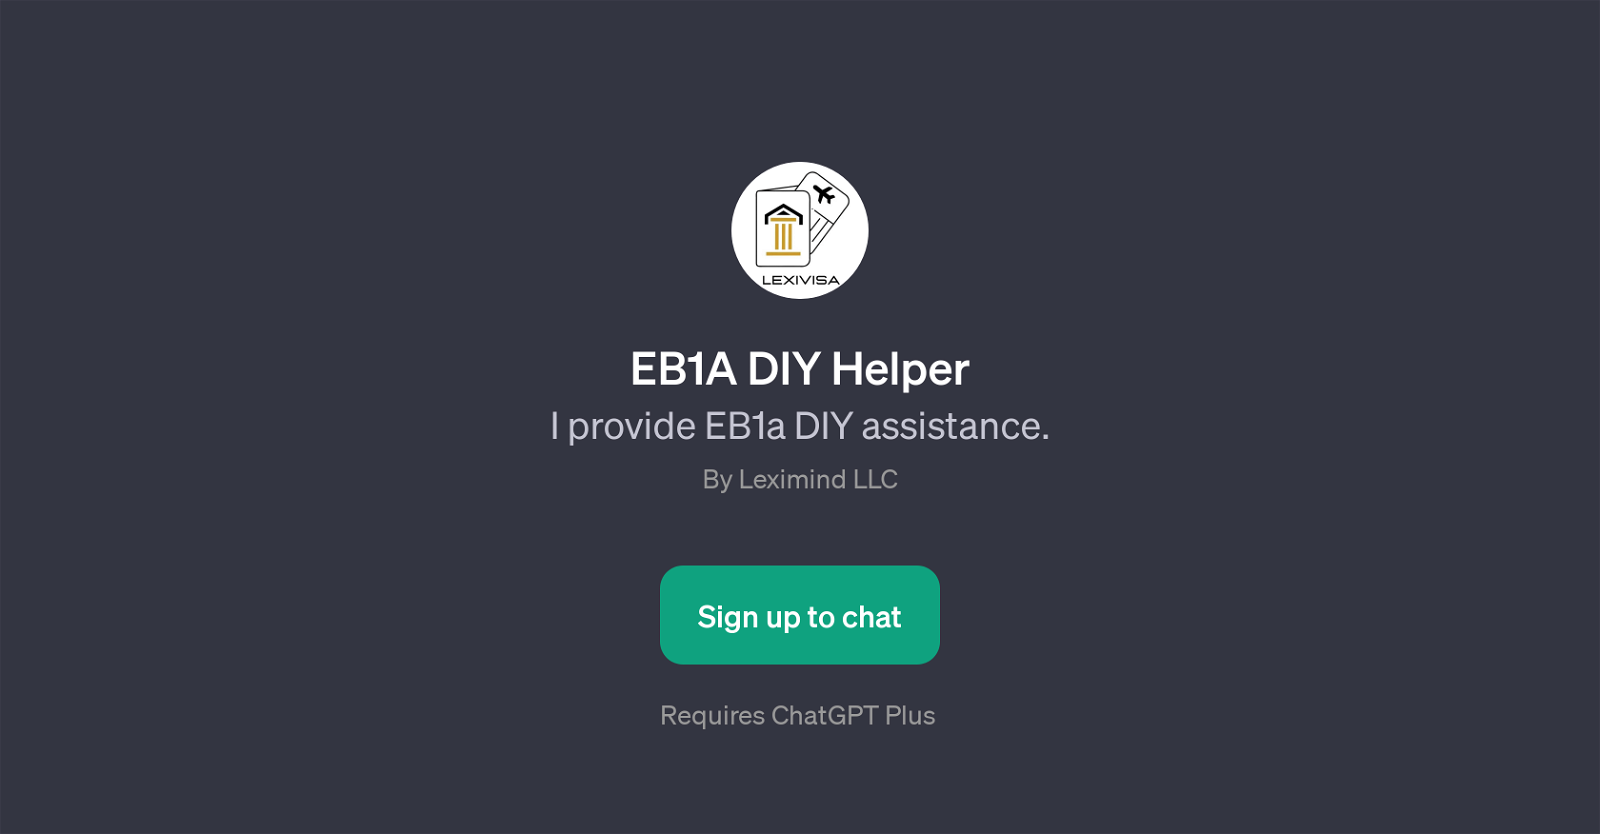 EB1A DIY Helper website